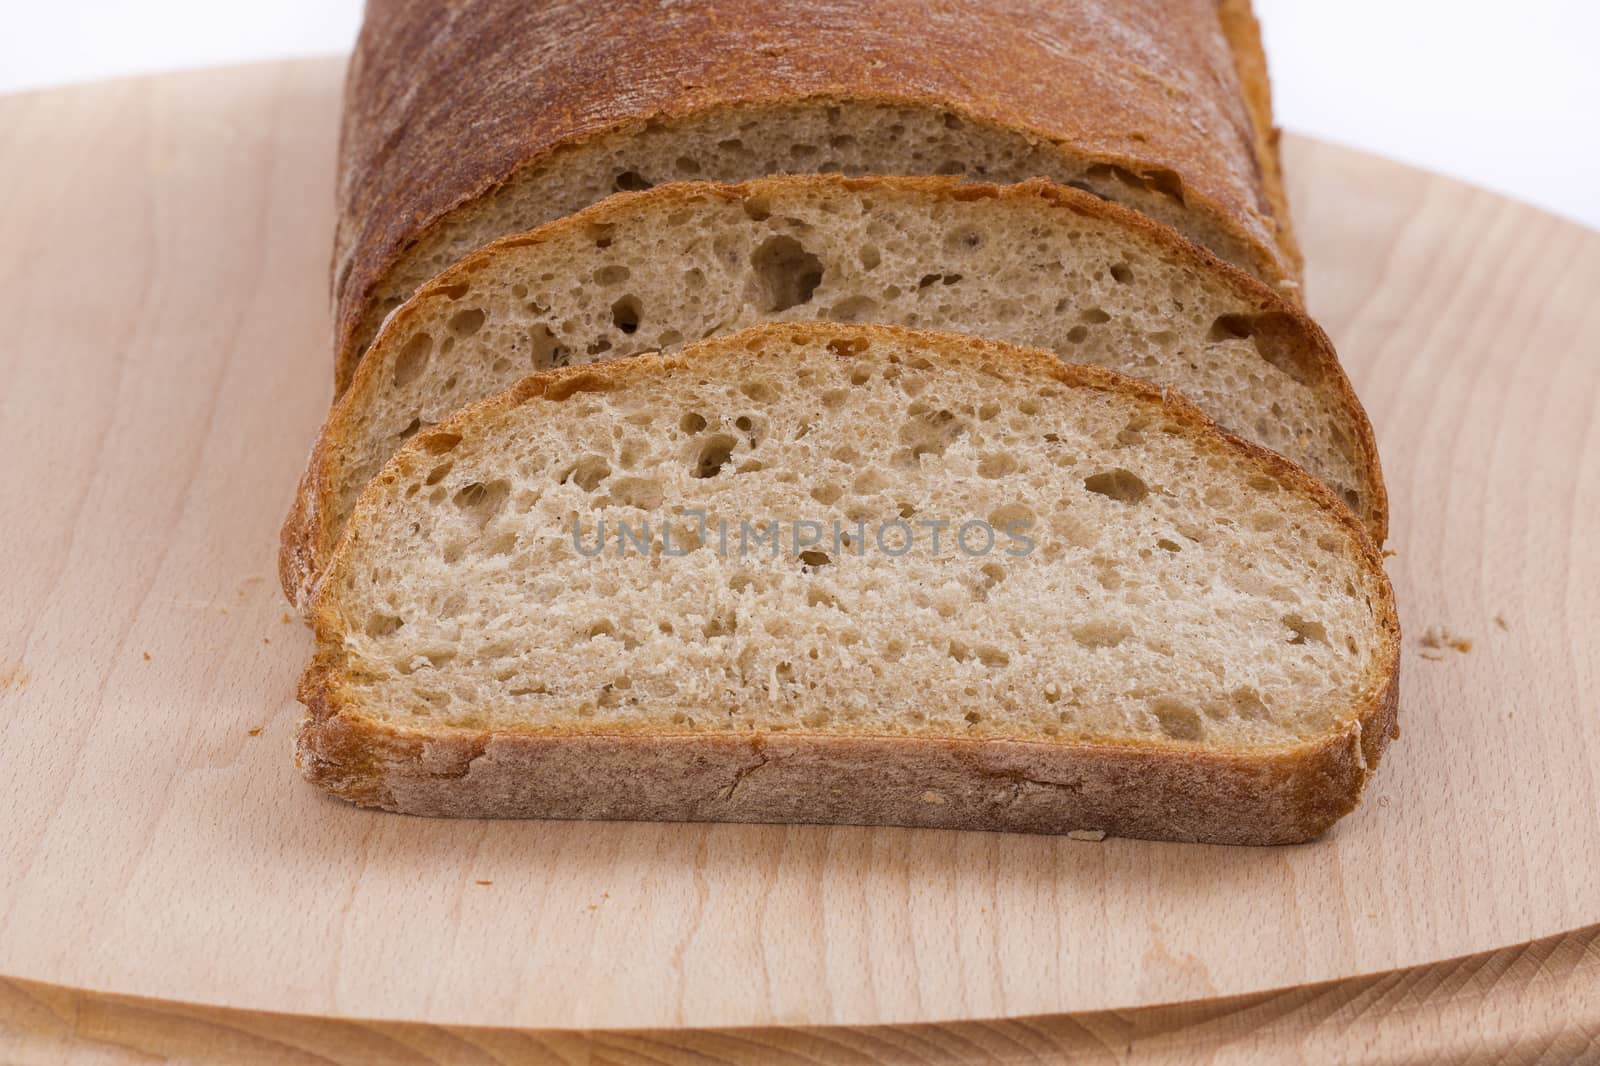 Fresh sliced bread on a wooden board